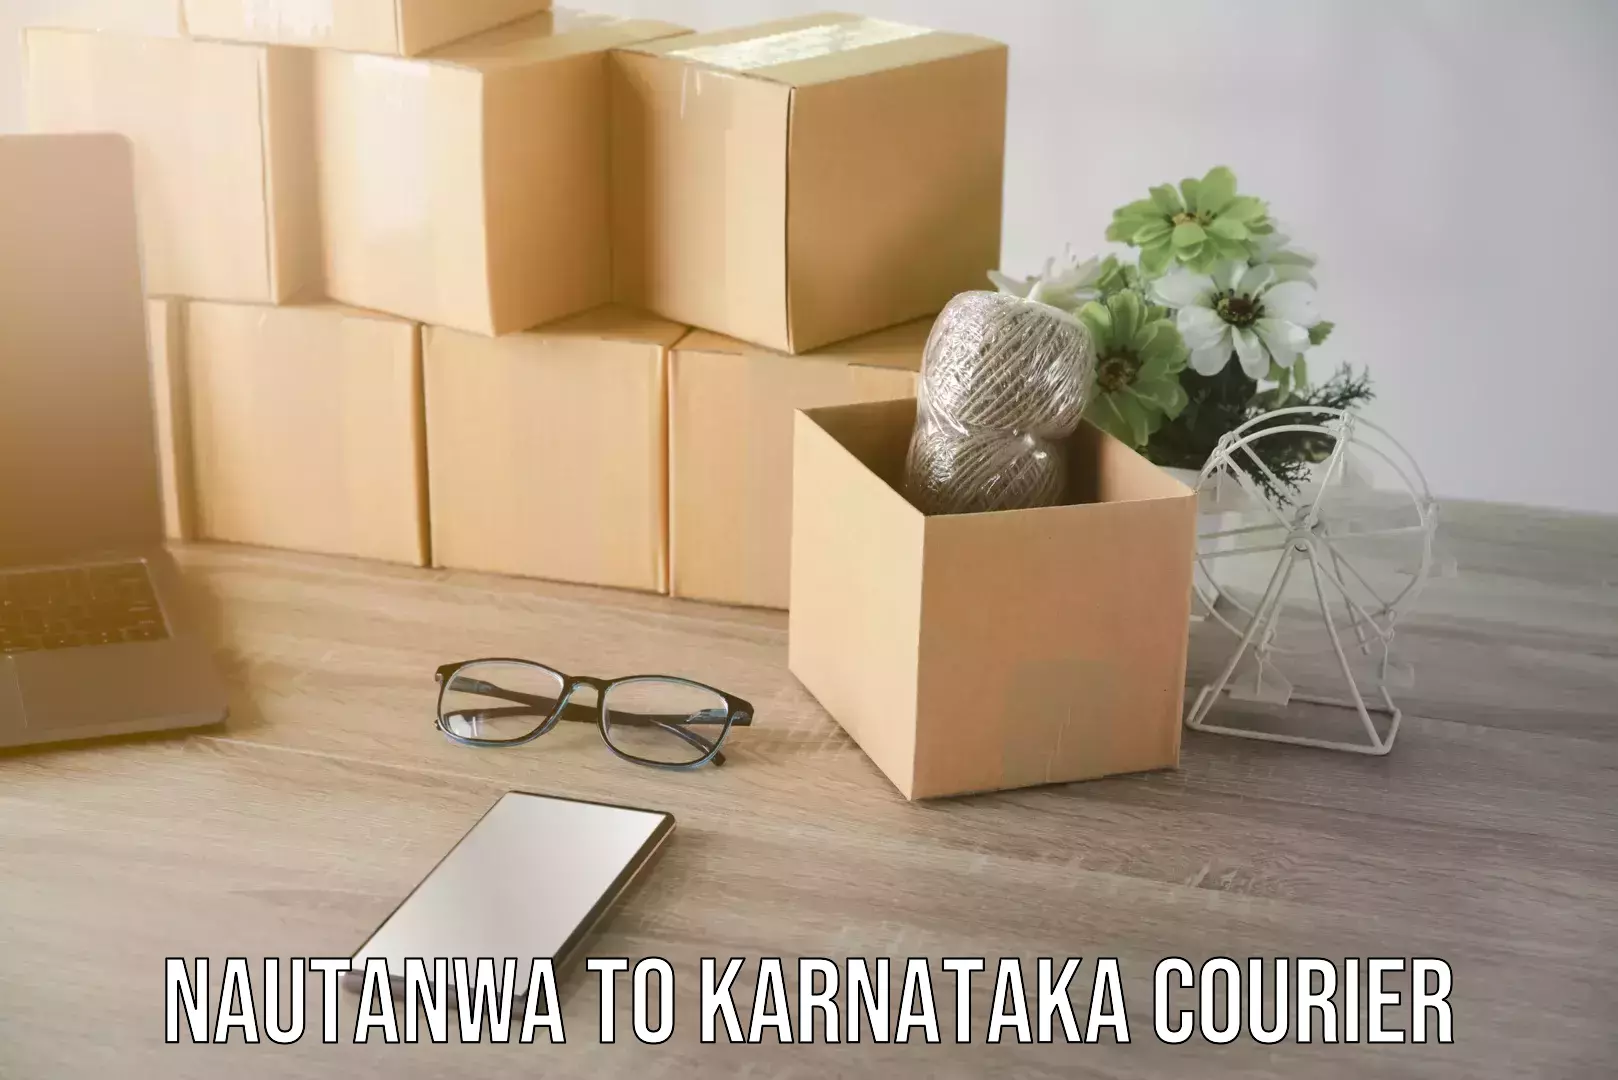 Seamless moving process Nautanwa to Karnataka